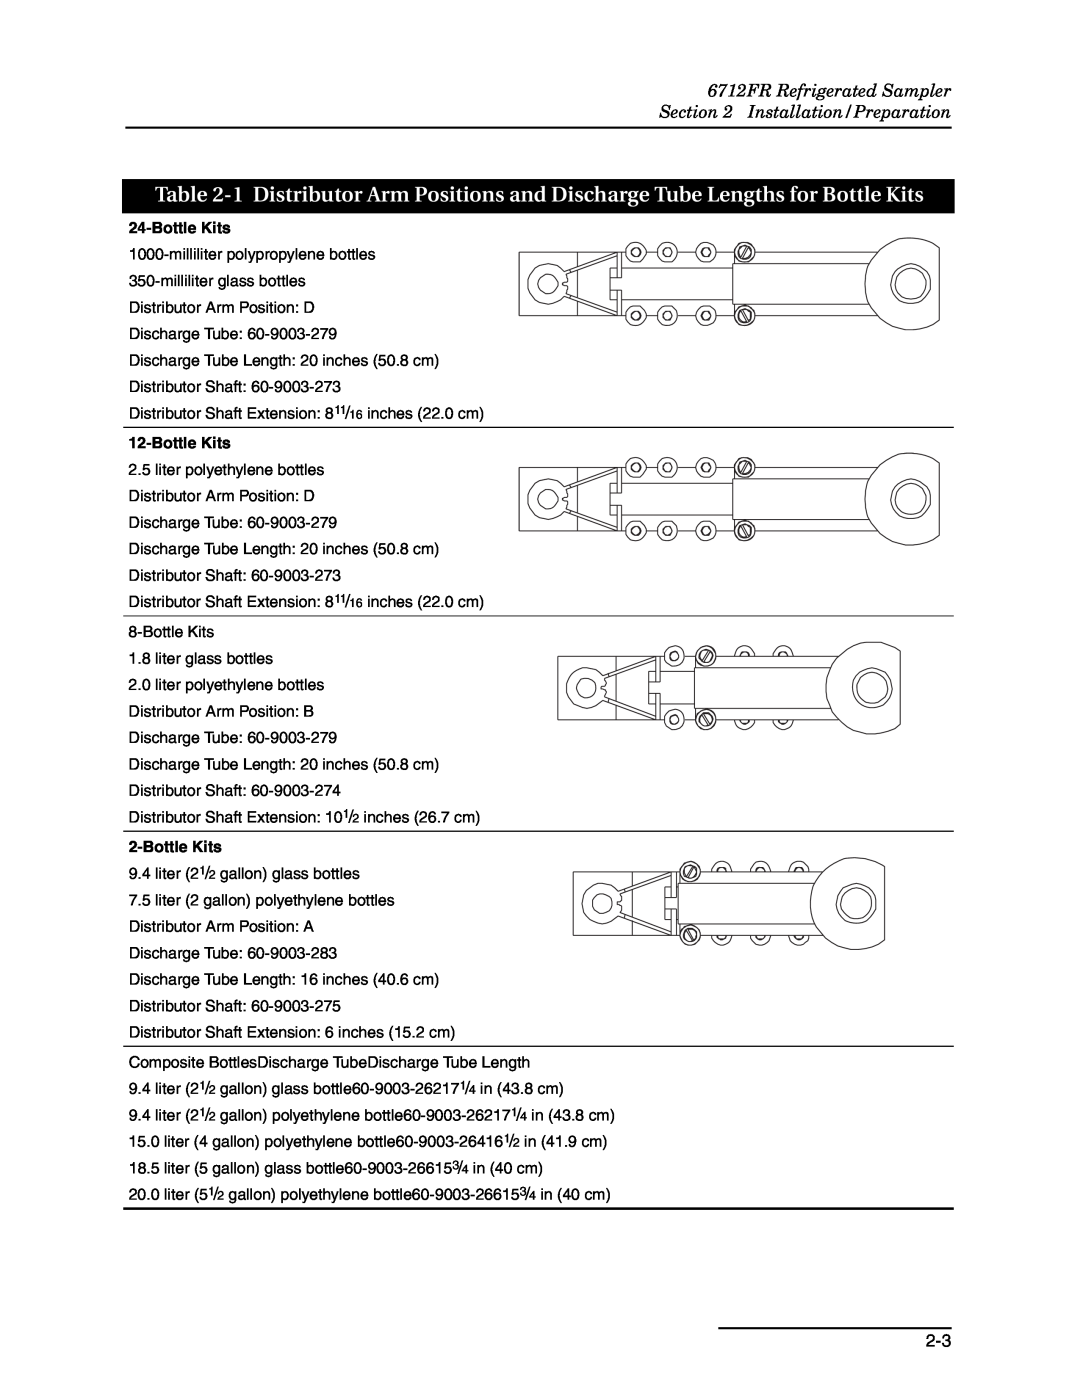 Teledyne manual 6712FR Refrigerated Sampler Installation/Preparation, Bottle Kits 